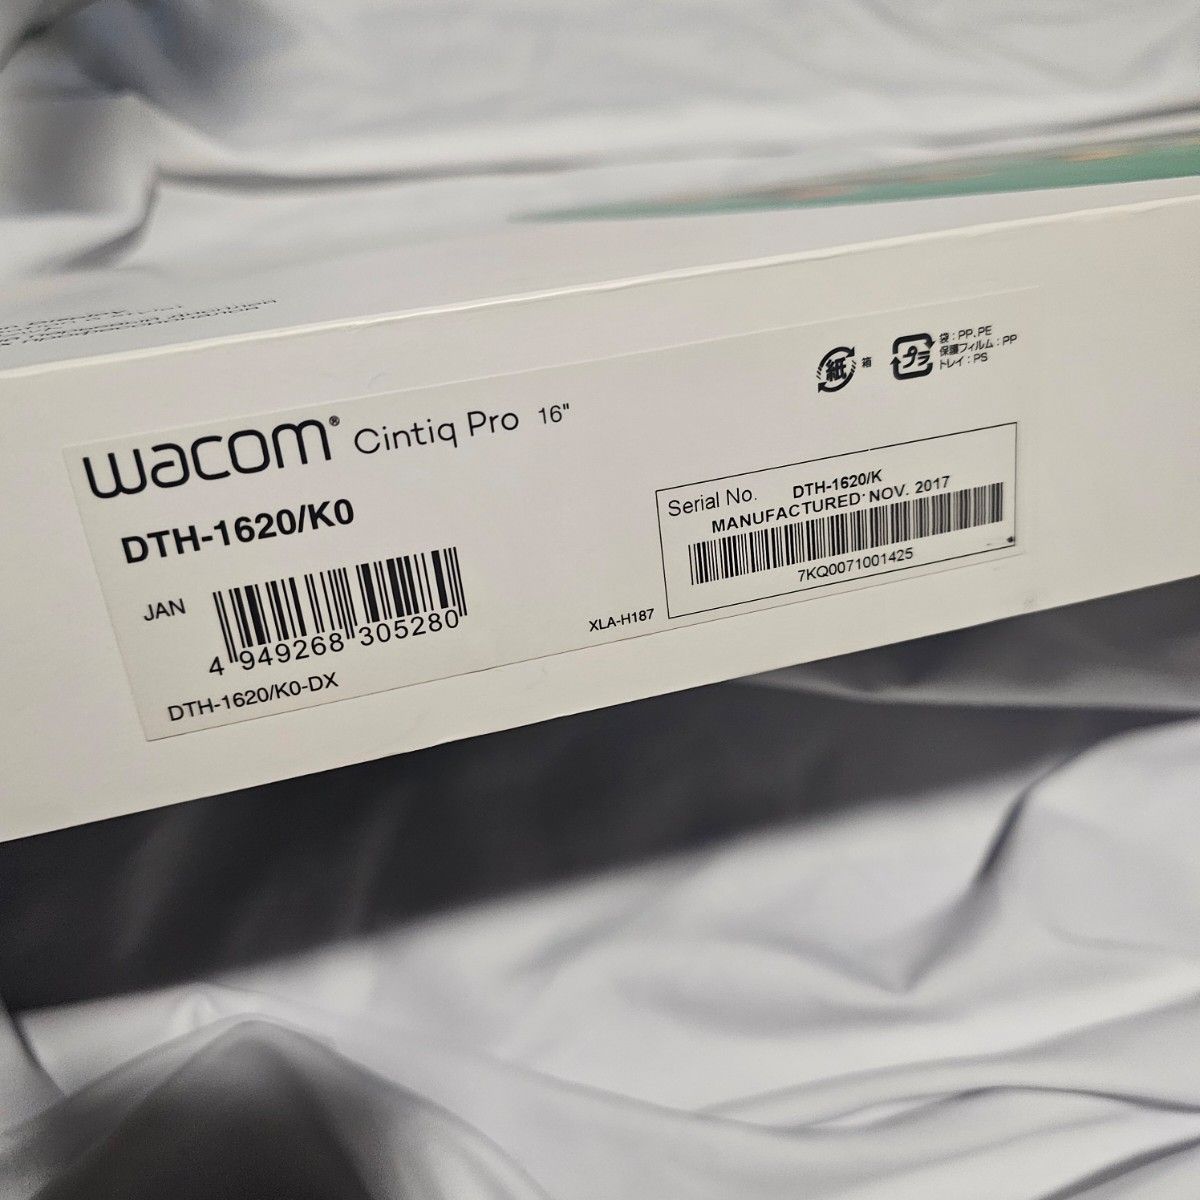 Wacom Cintiq Pro 16 DTH-1620/K0